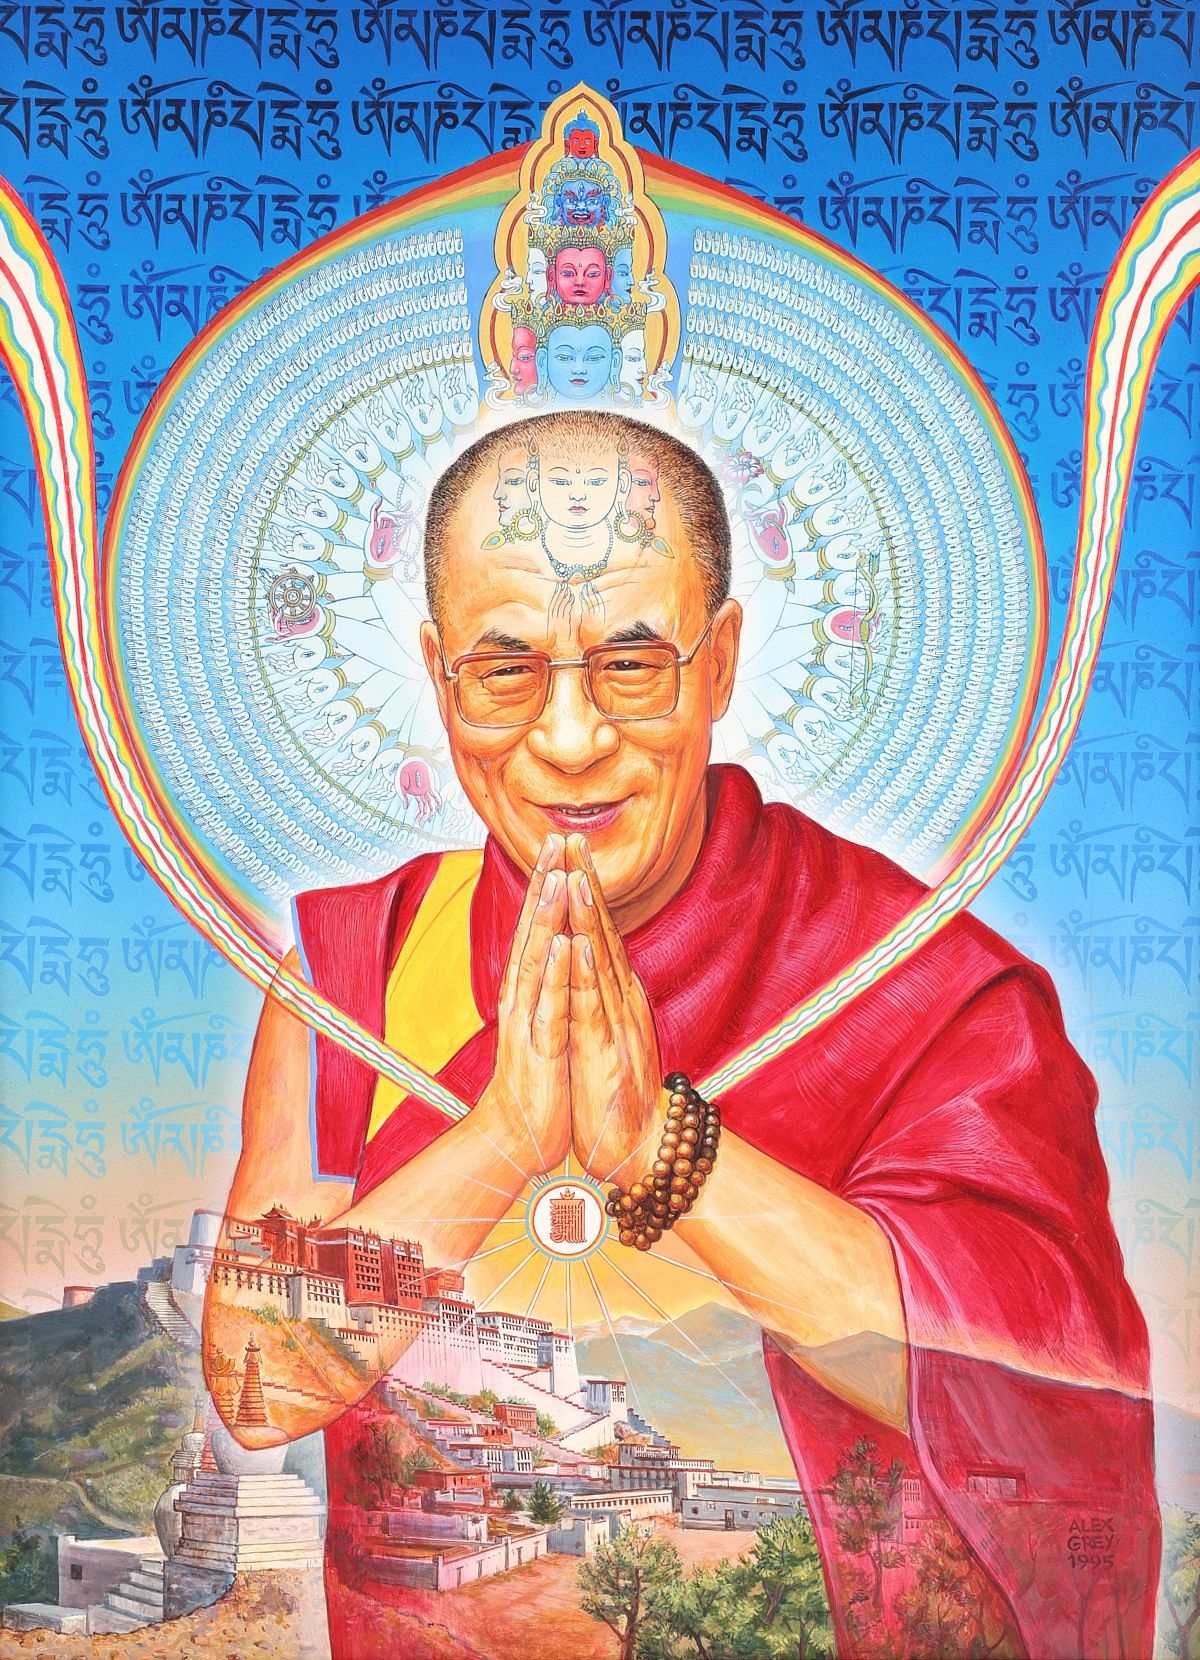 Artwork by Alex Grey, Dalai Lama, Made of Acrylic on wood panel